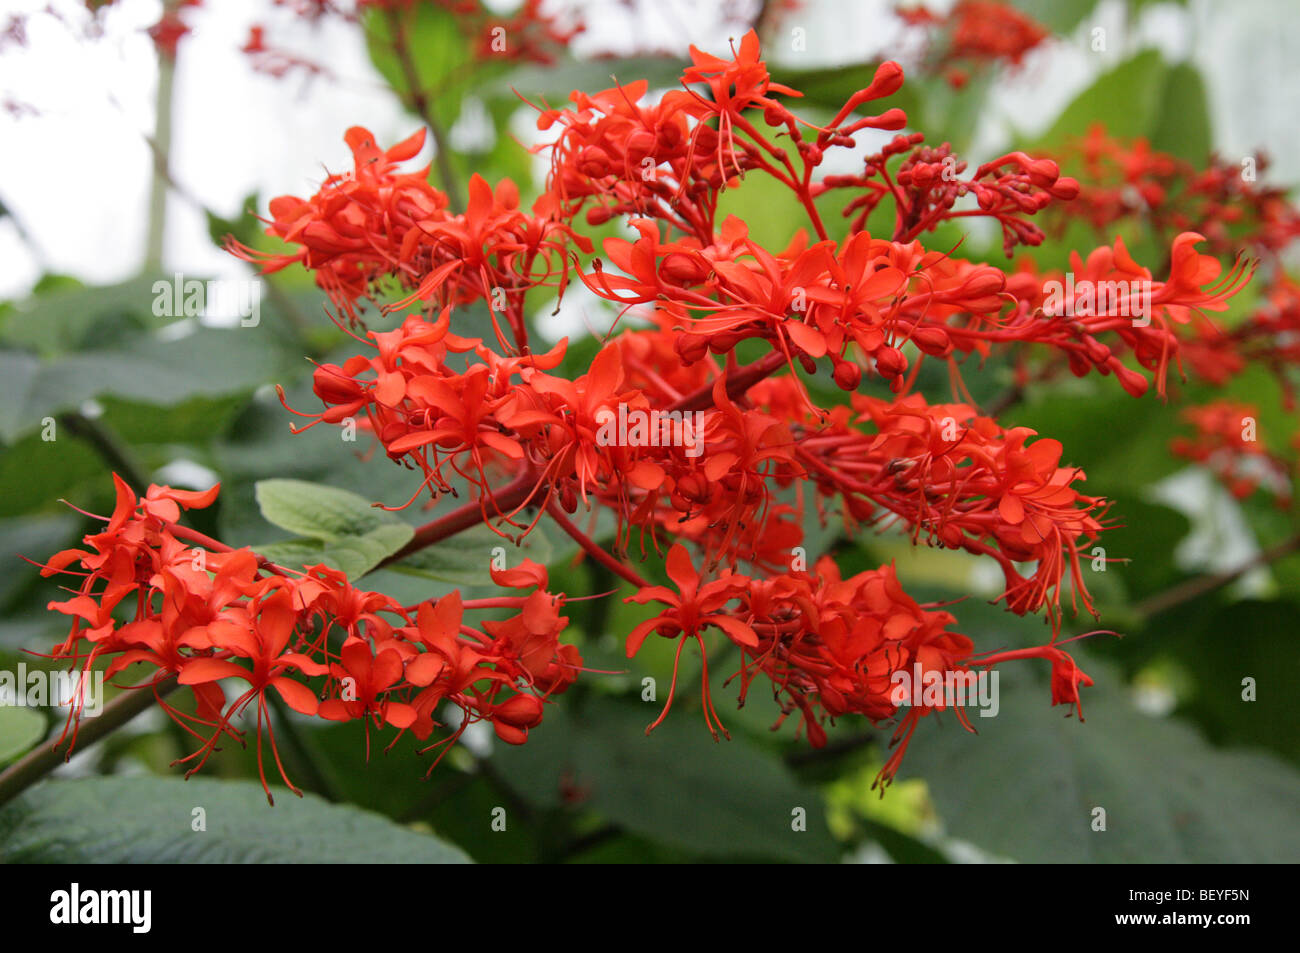 Clerodendron, Flaming Glory Bower, Giant Salvia, Javanese Glorybower, Pagoda Flower, Clerodendrum speciosissimuum, Lamiaceae Stock Photo